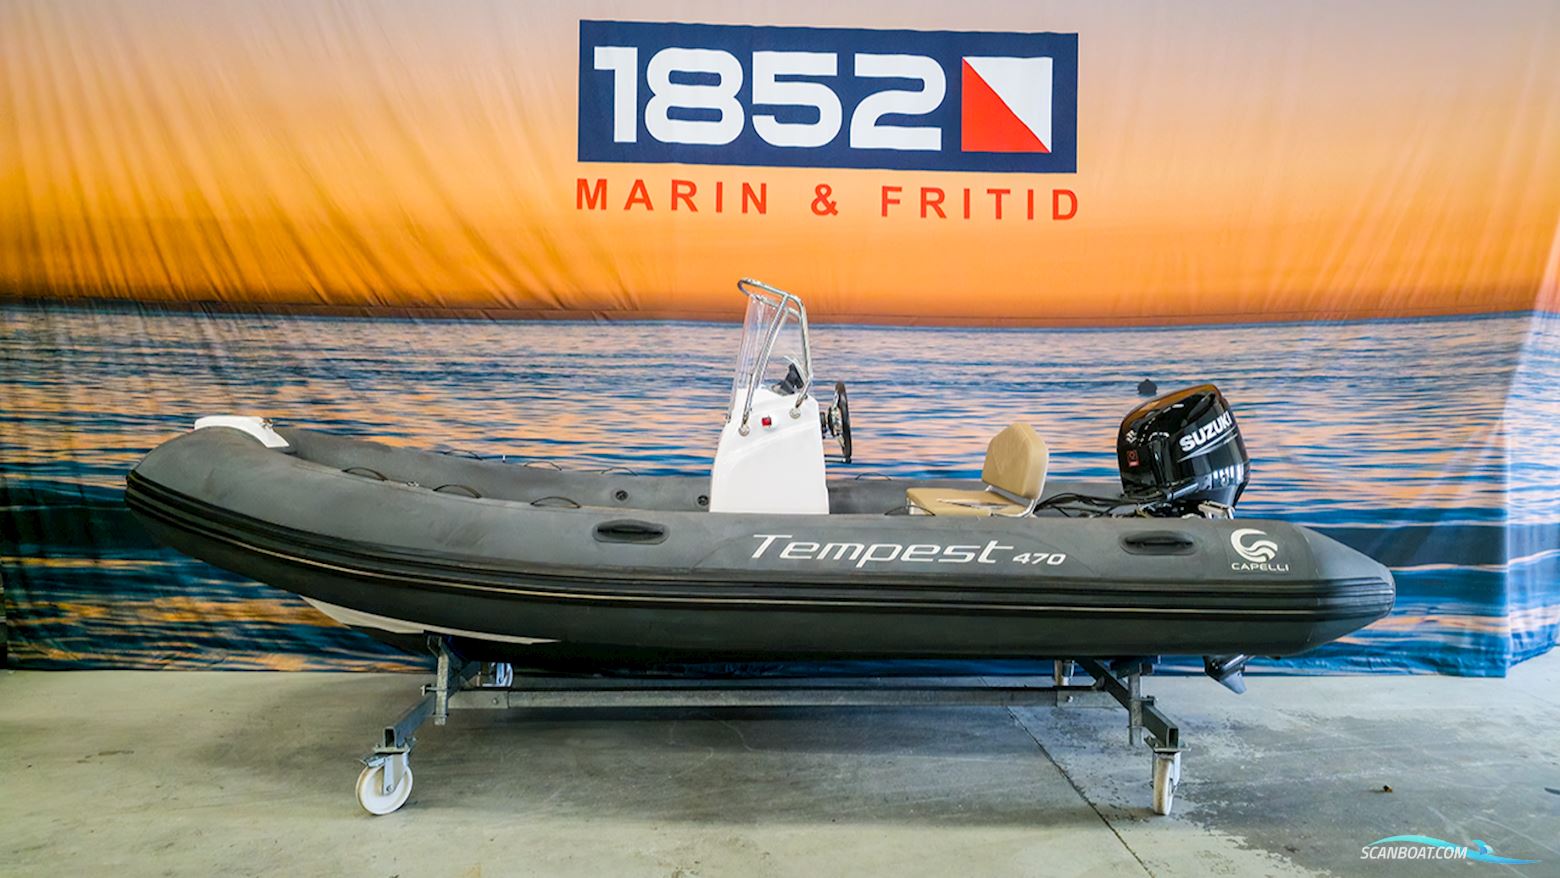 Capelli Tempest 470 Swe Motor boat 2021, with Suzuki engine, Sweden